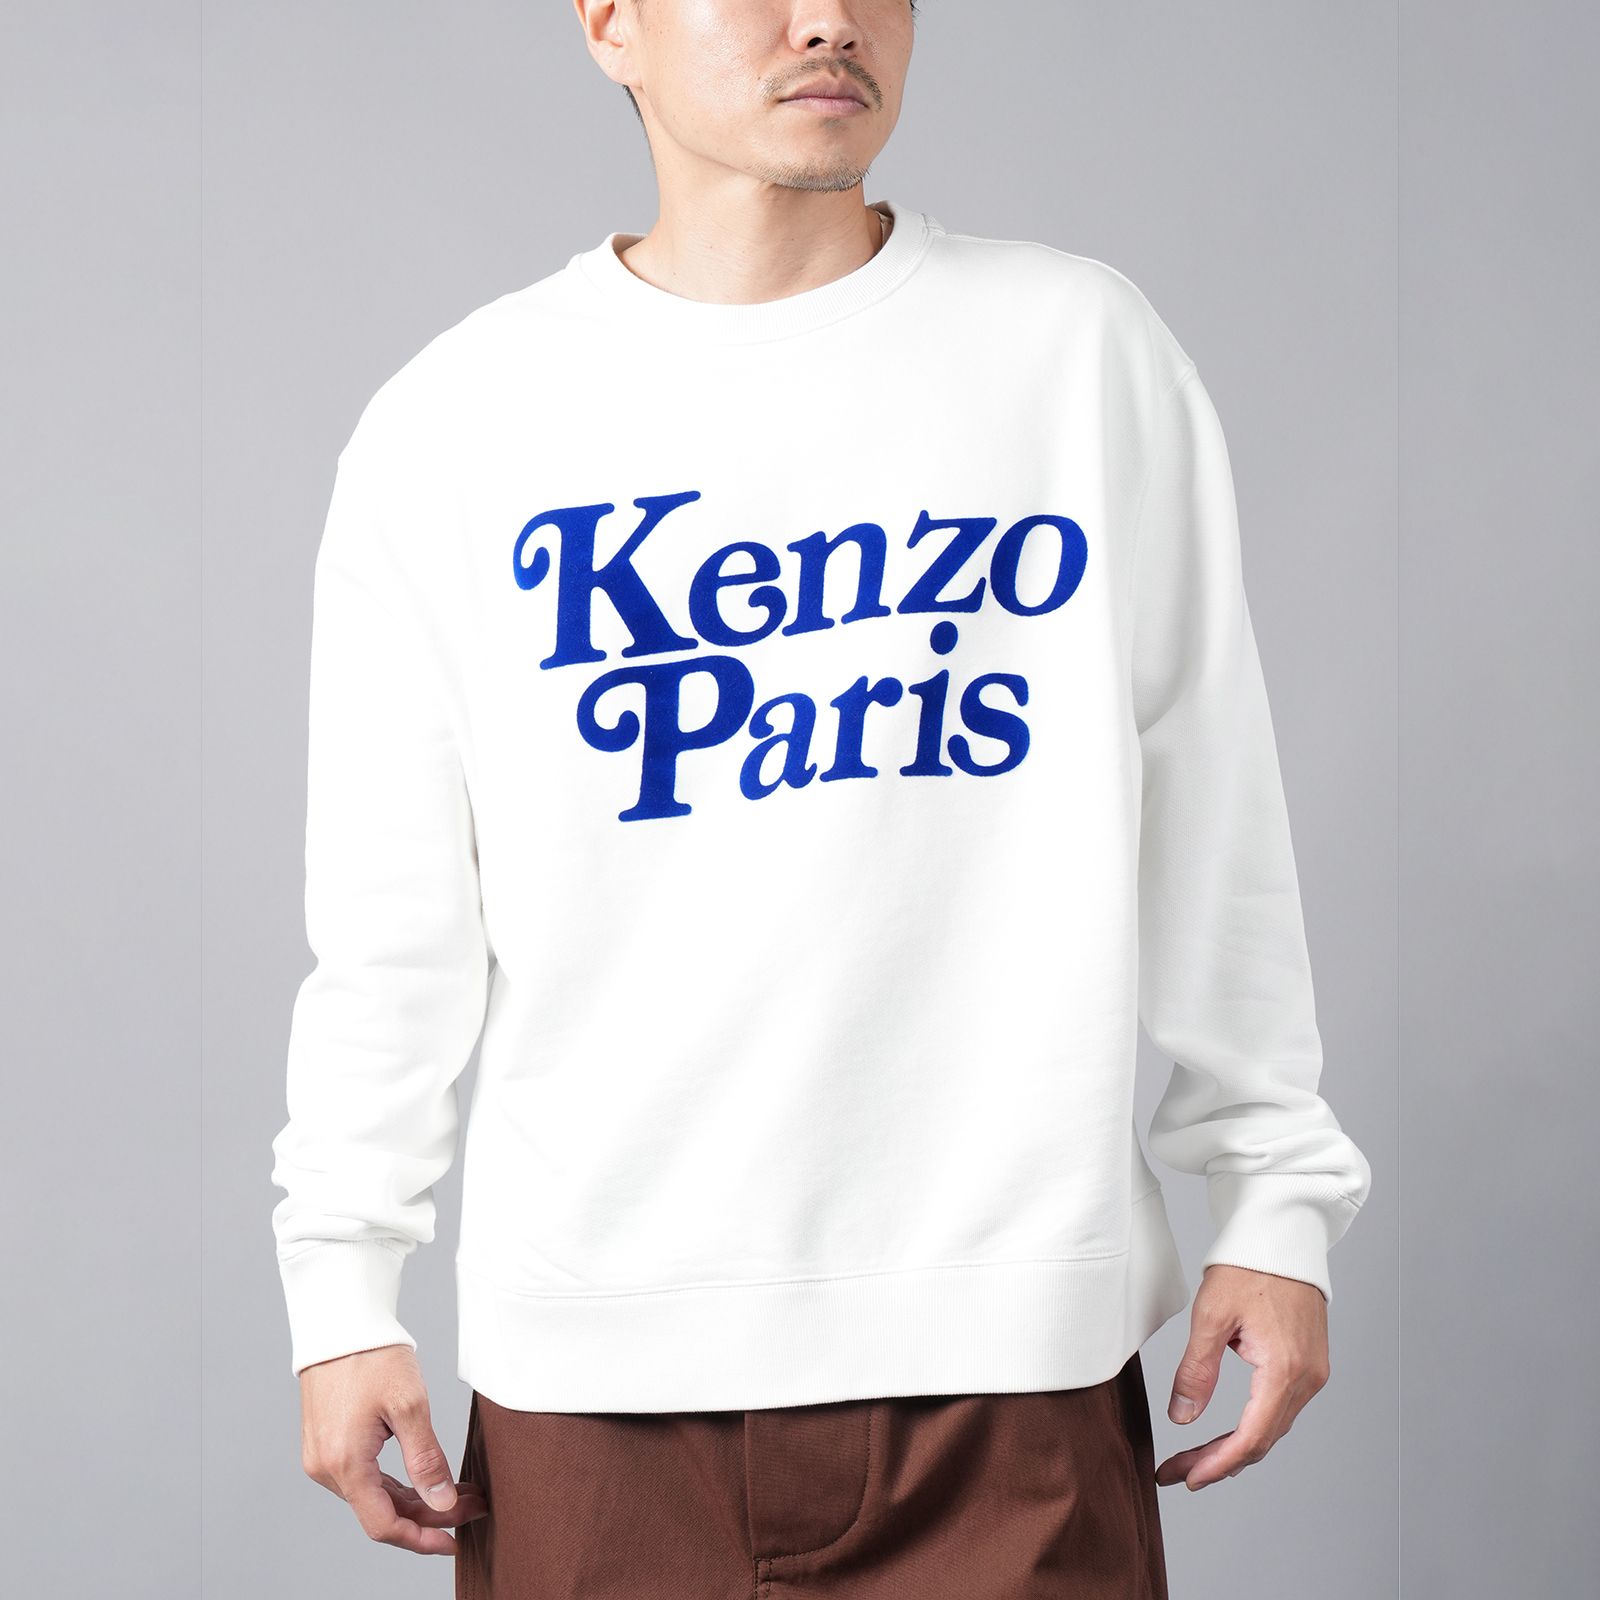 KENZO - 【残りわずか】【限定】 KENZO x VERDY / KENZO BY VERDY 